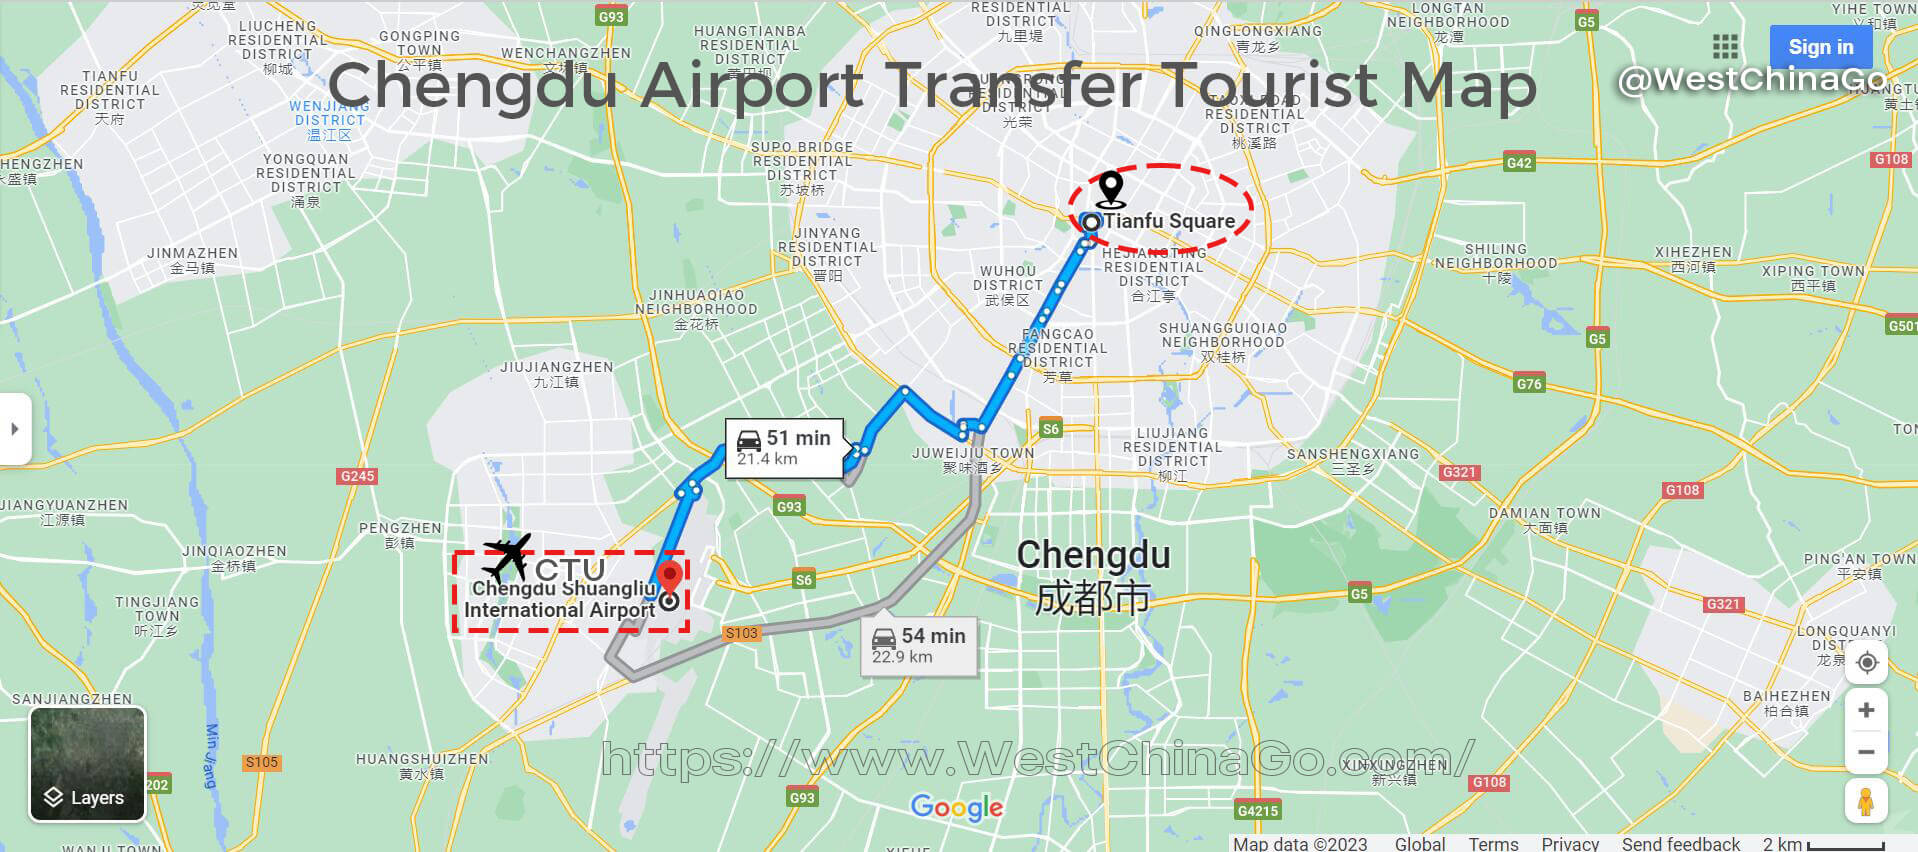 ChengDu Airport Transfer Tourist Map